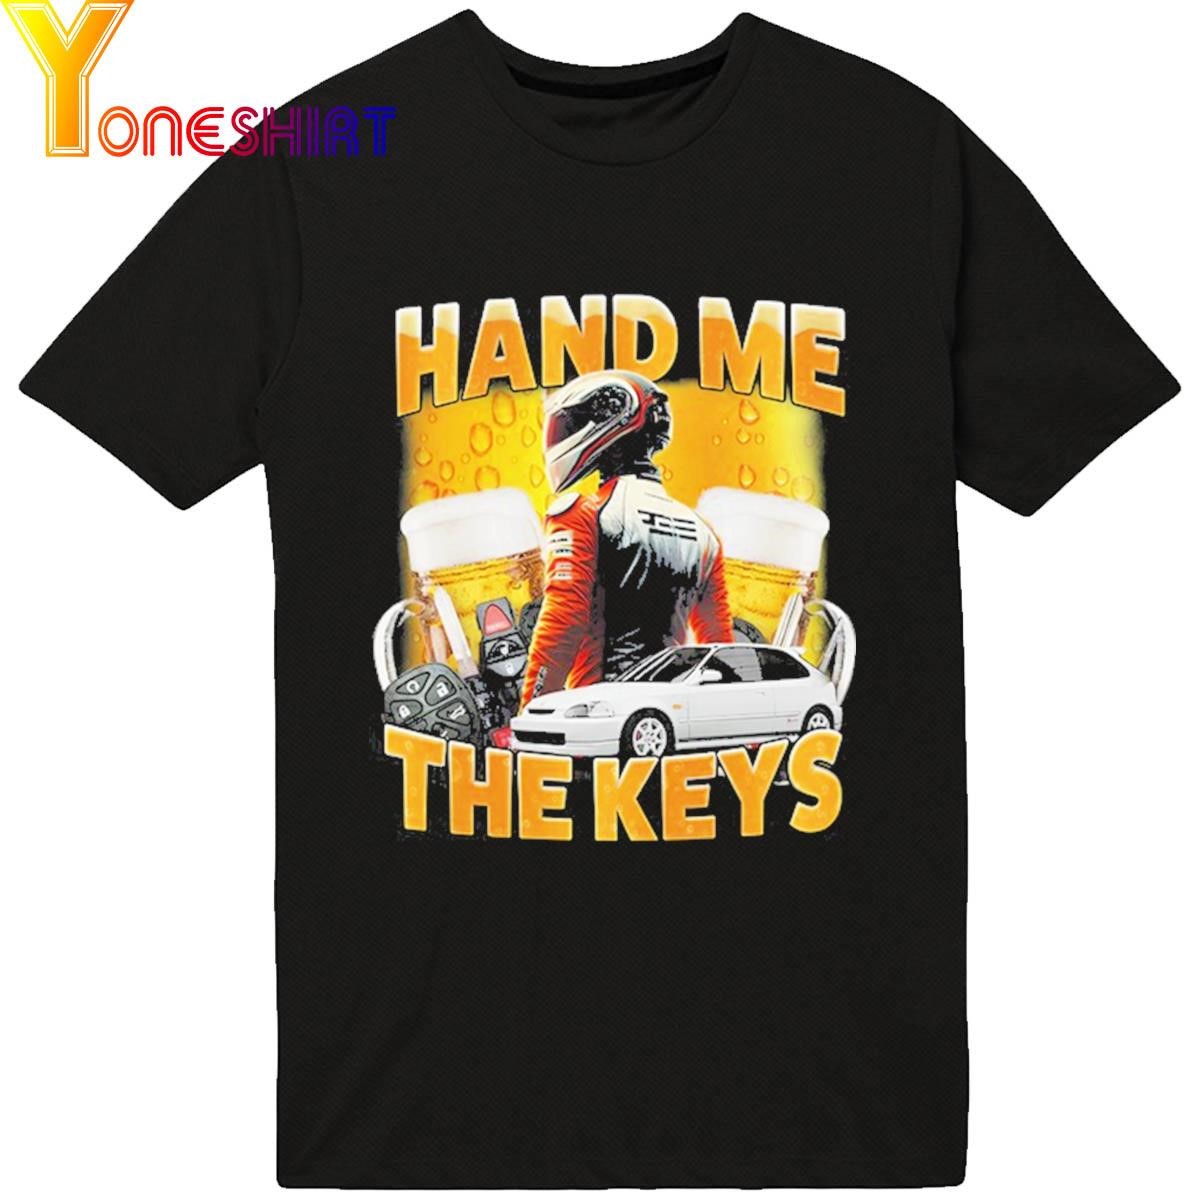 Hand Me The Keys New shirt